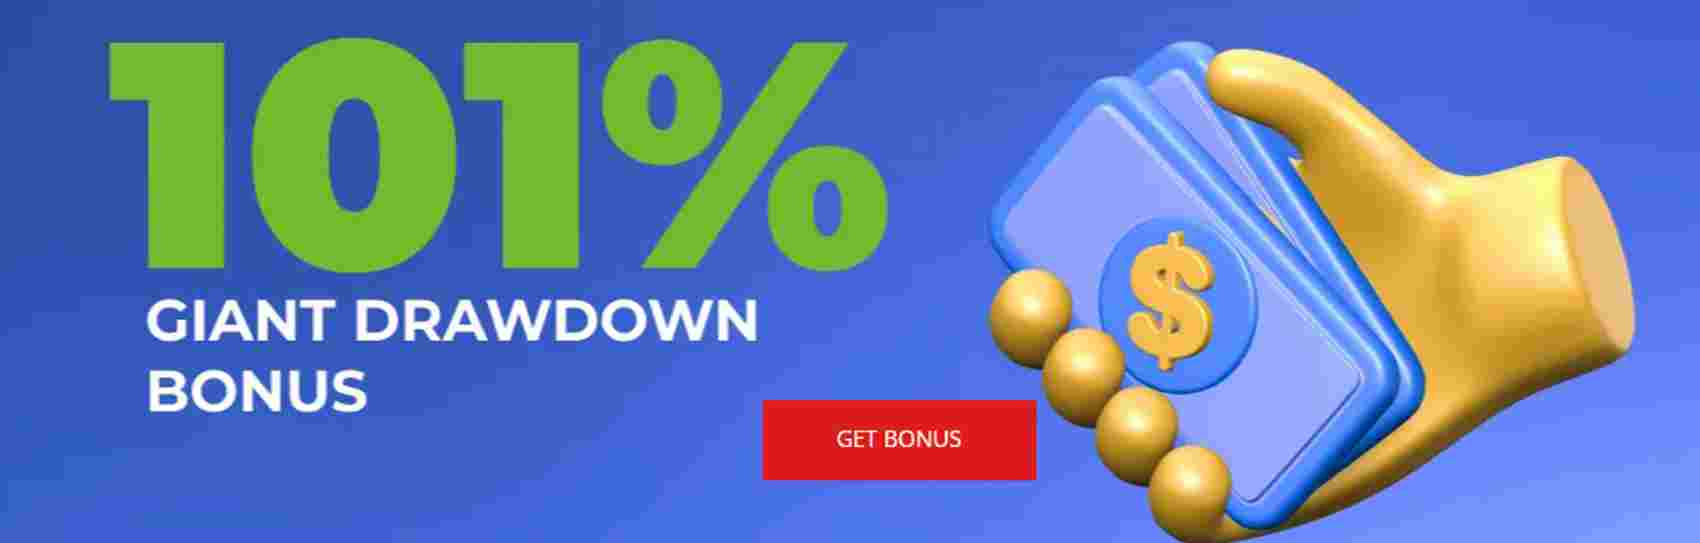 101% Giant Drawdown Bonus – FreshForex